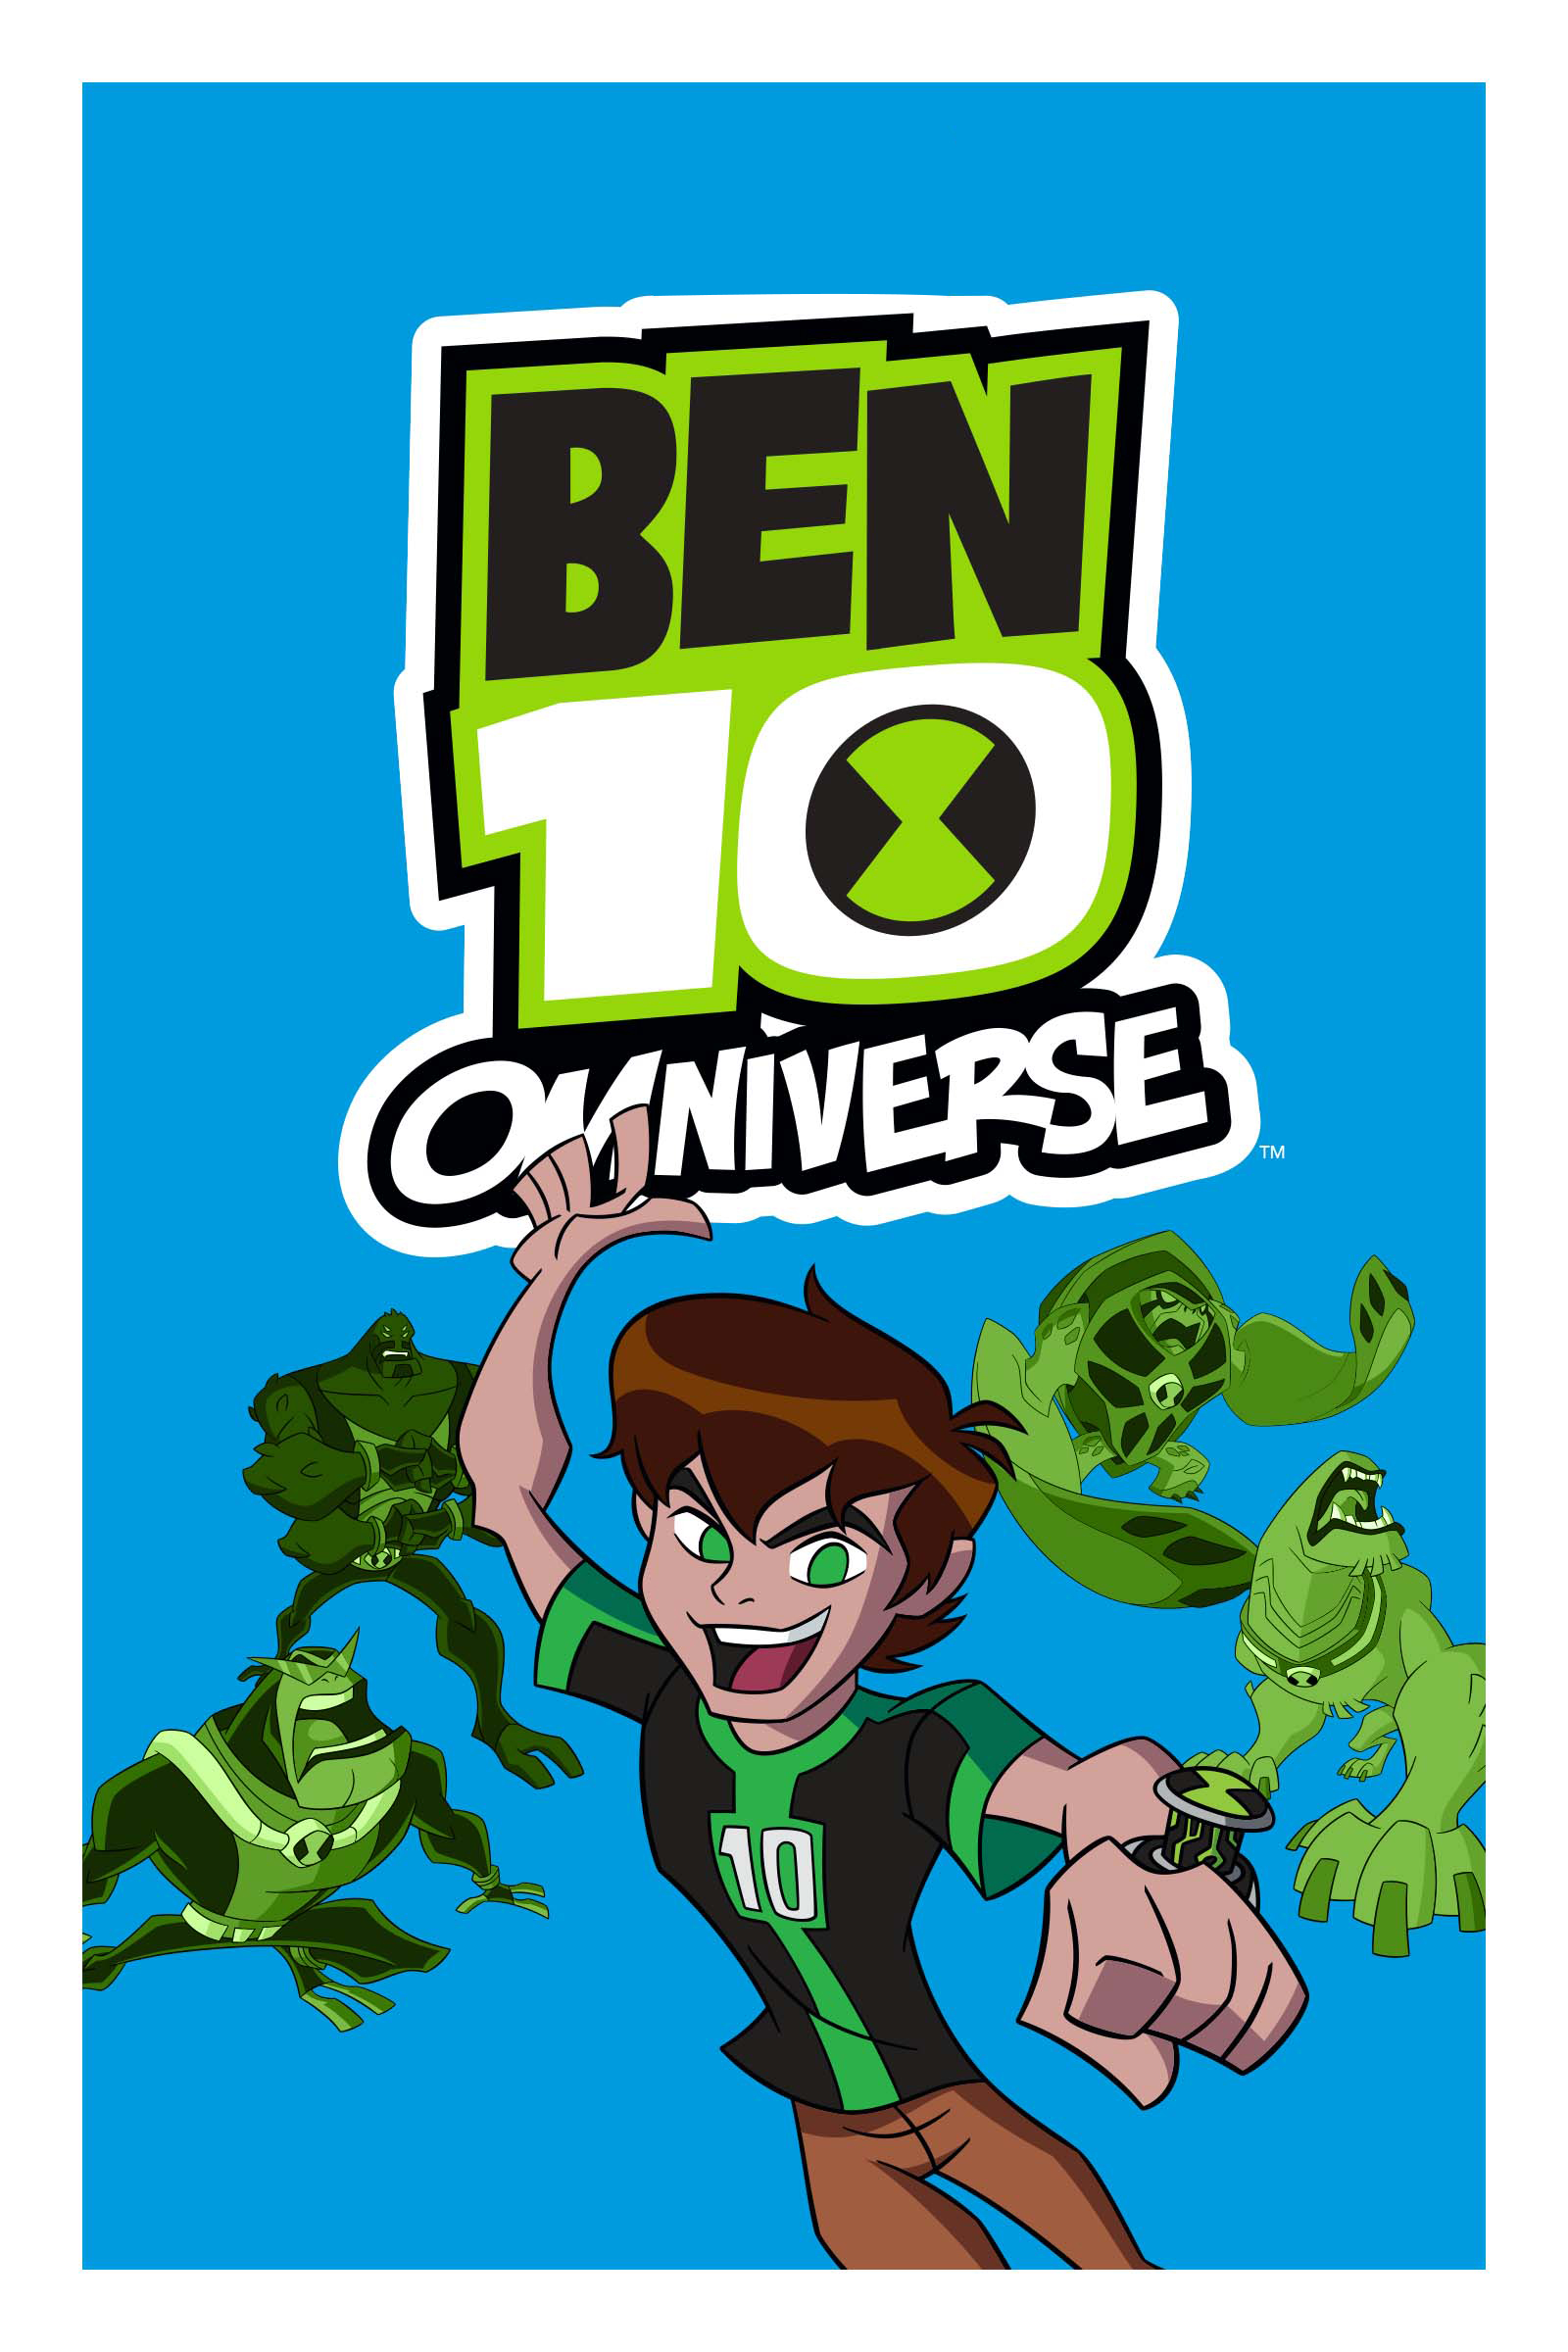 Ben10 Omniverse Episode 1 fires gifs